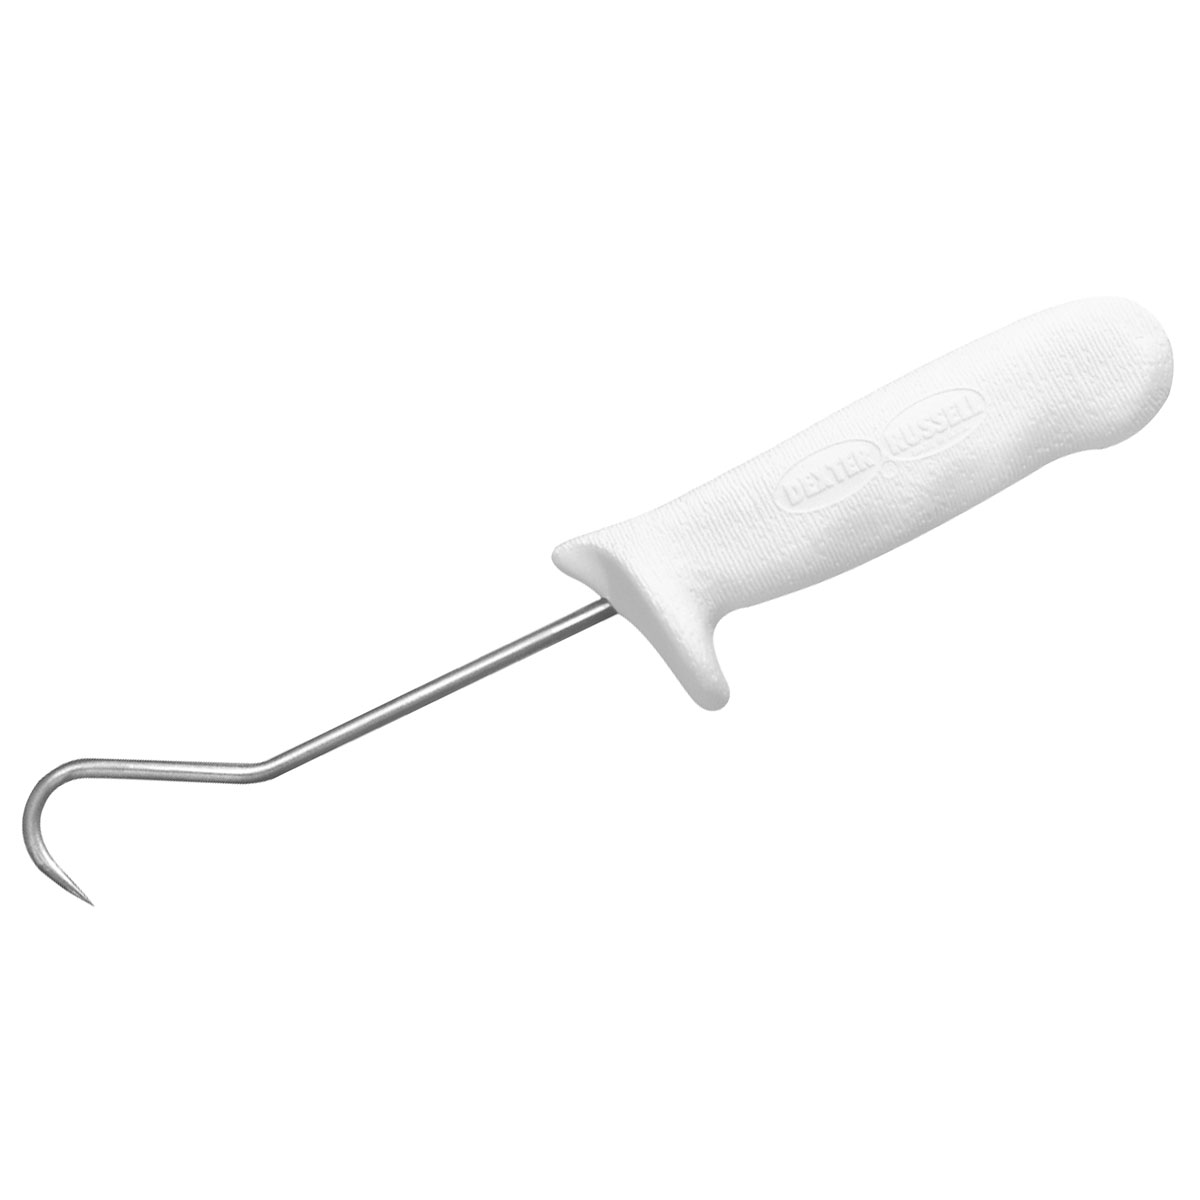 Dexter Node Hook 15cm (6inch), White Handle